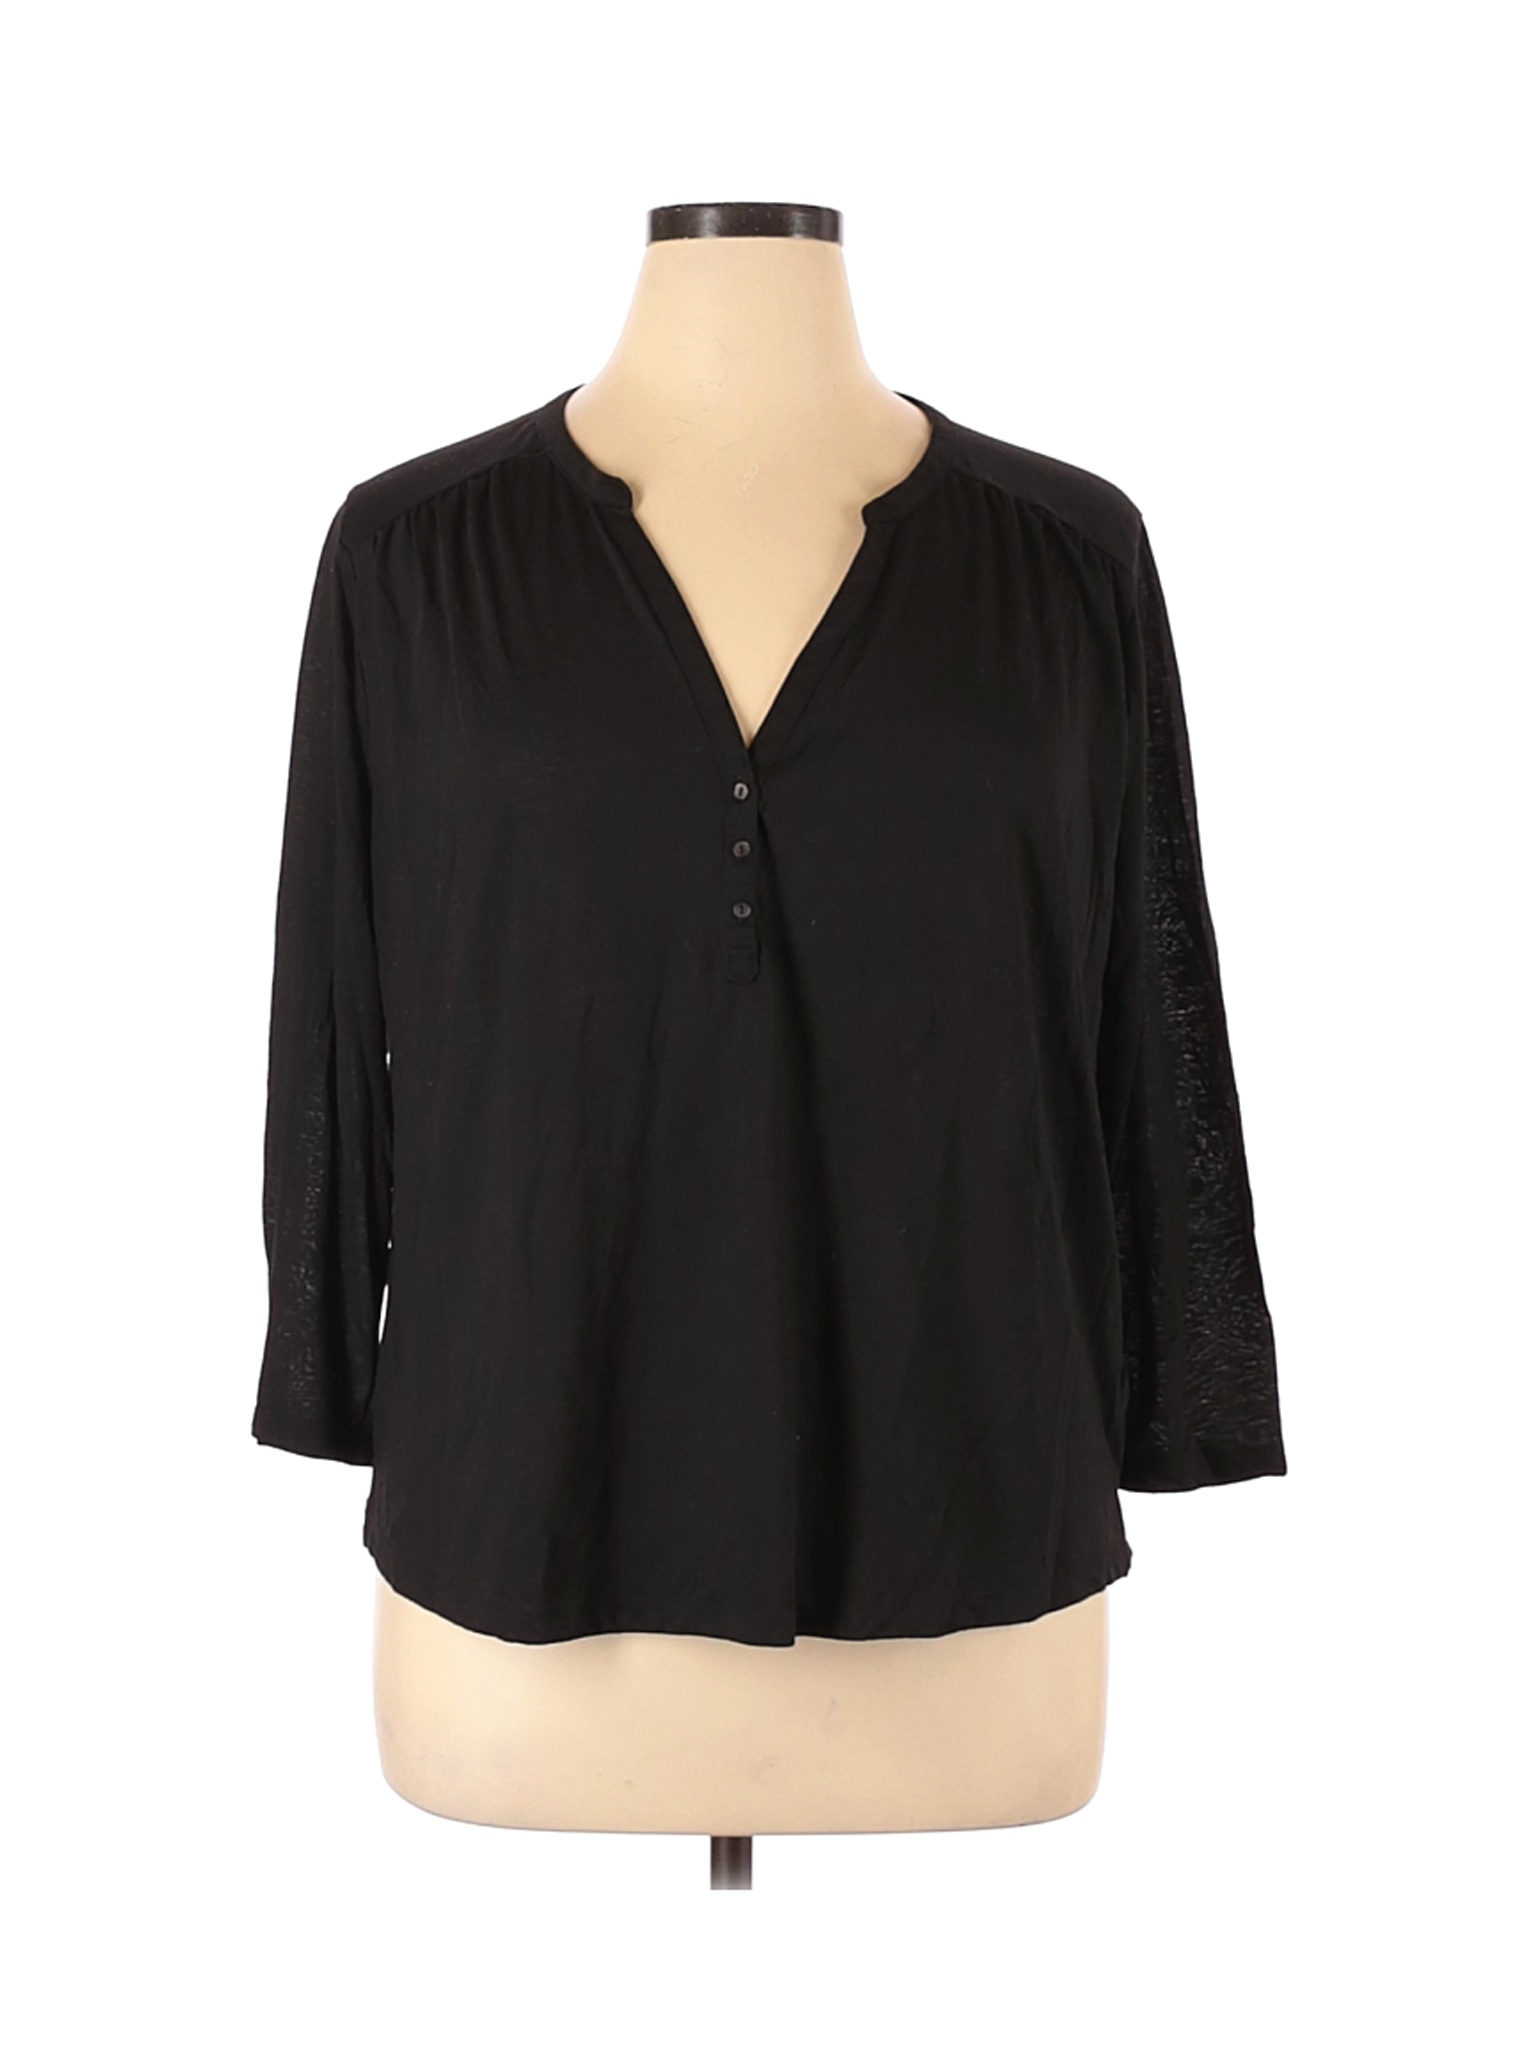 H&M Women Black Long Sleeve Top XL | eBay